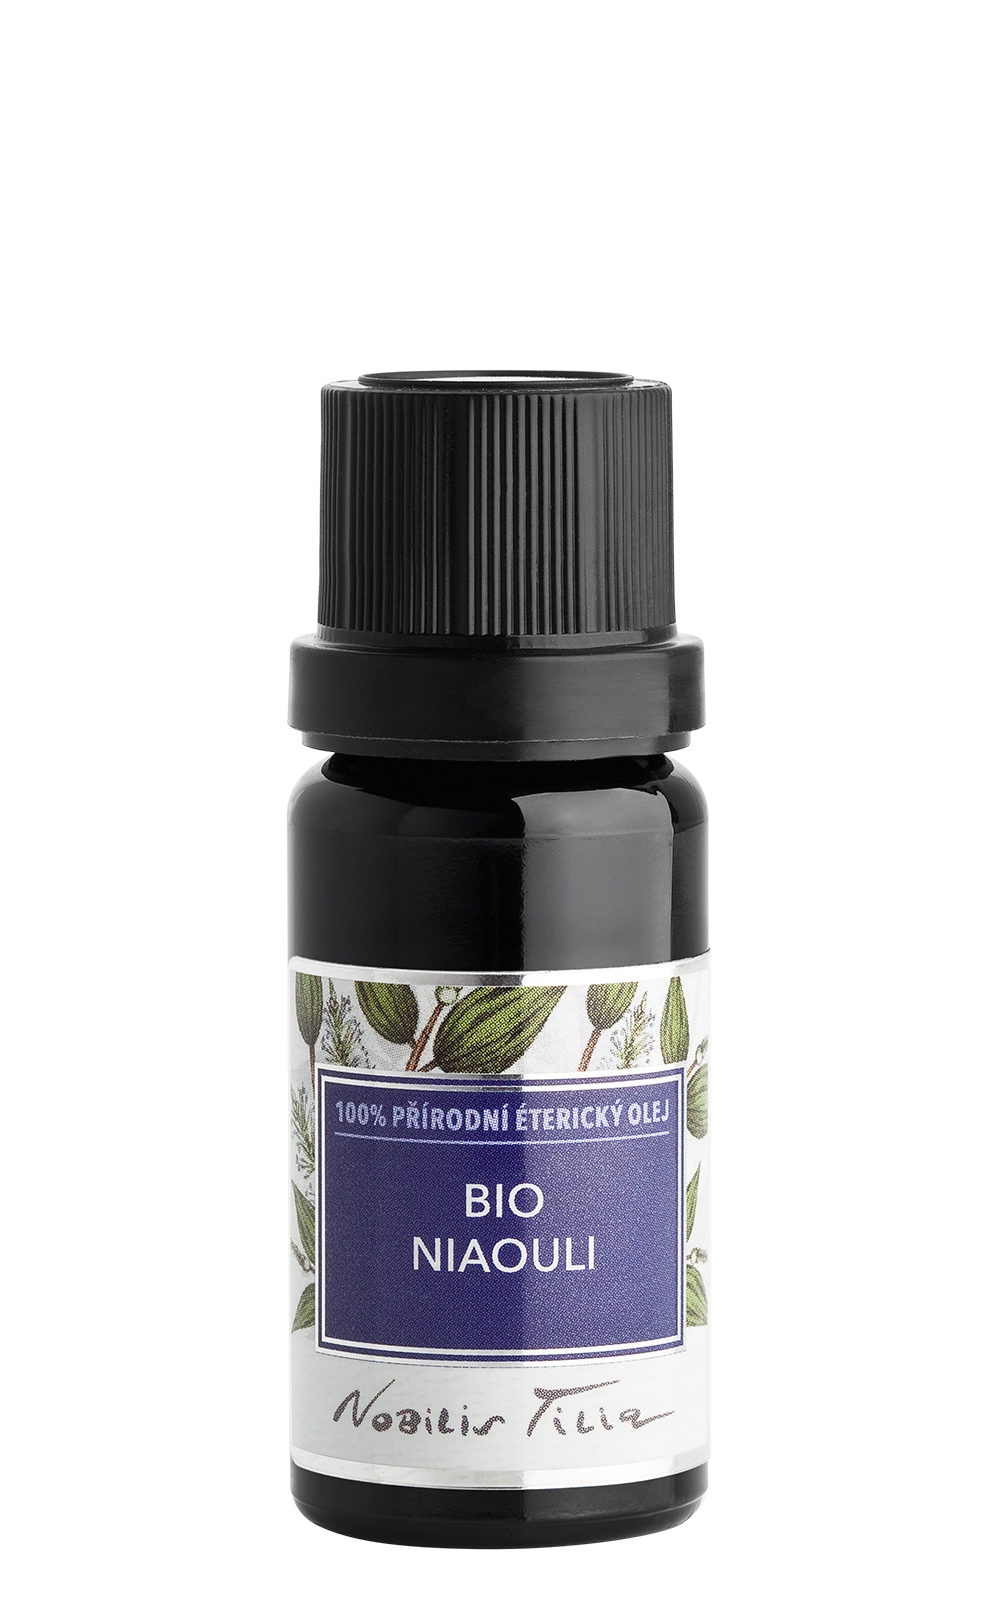 Éterický olej Nobilis Tilia bio Niaouli 10 ml (B0013B)